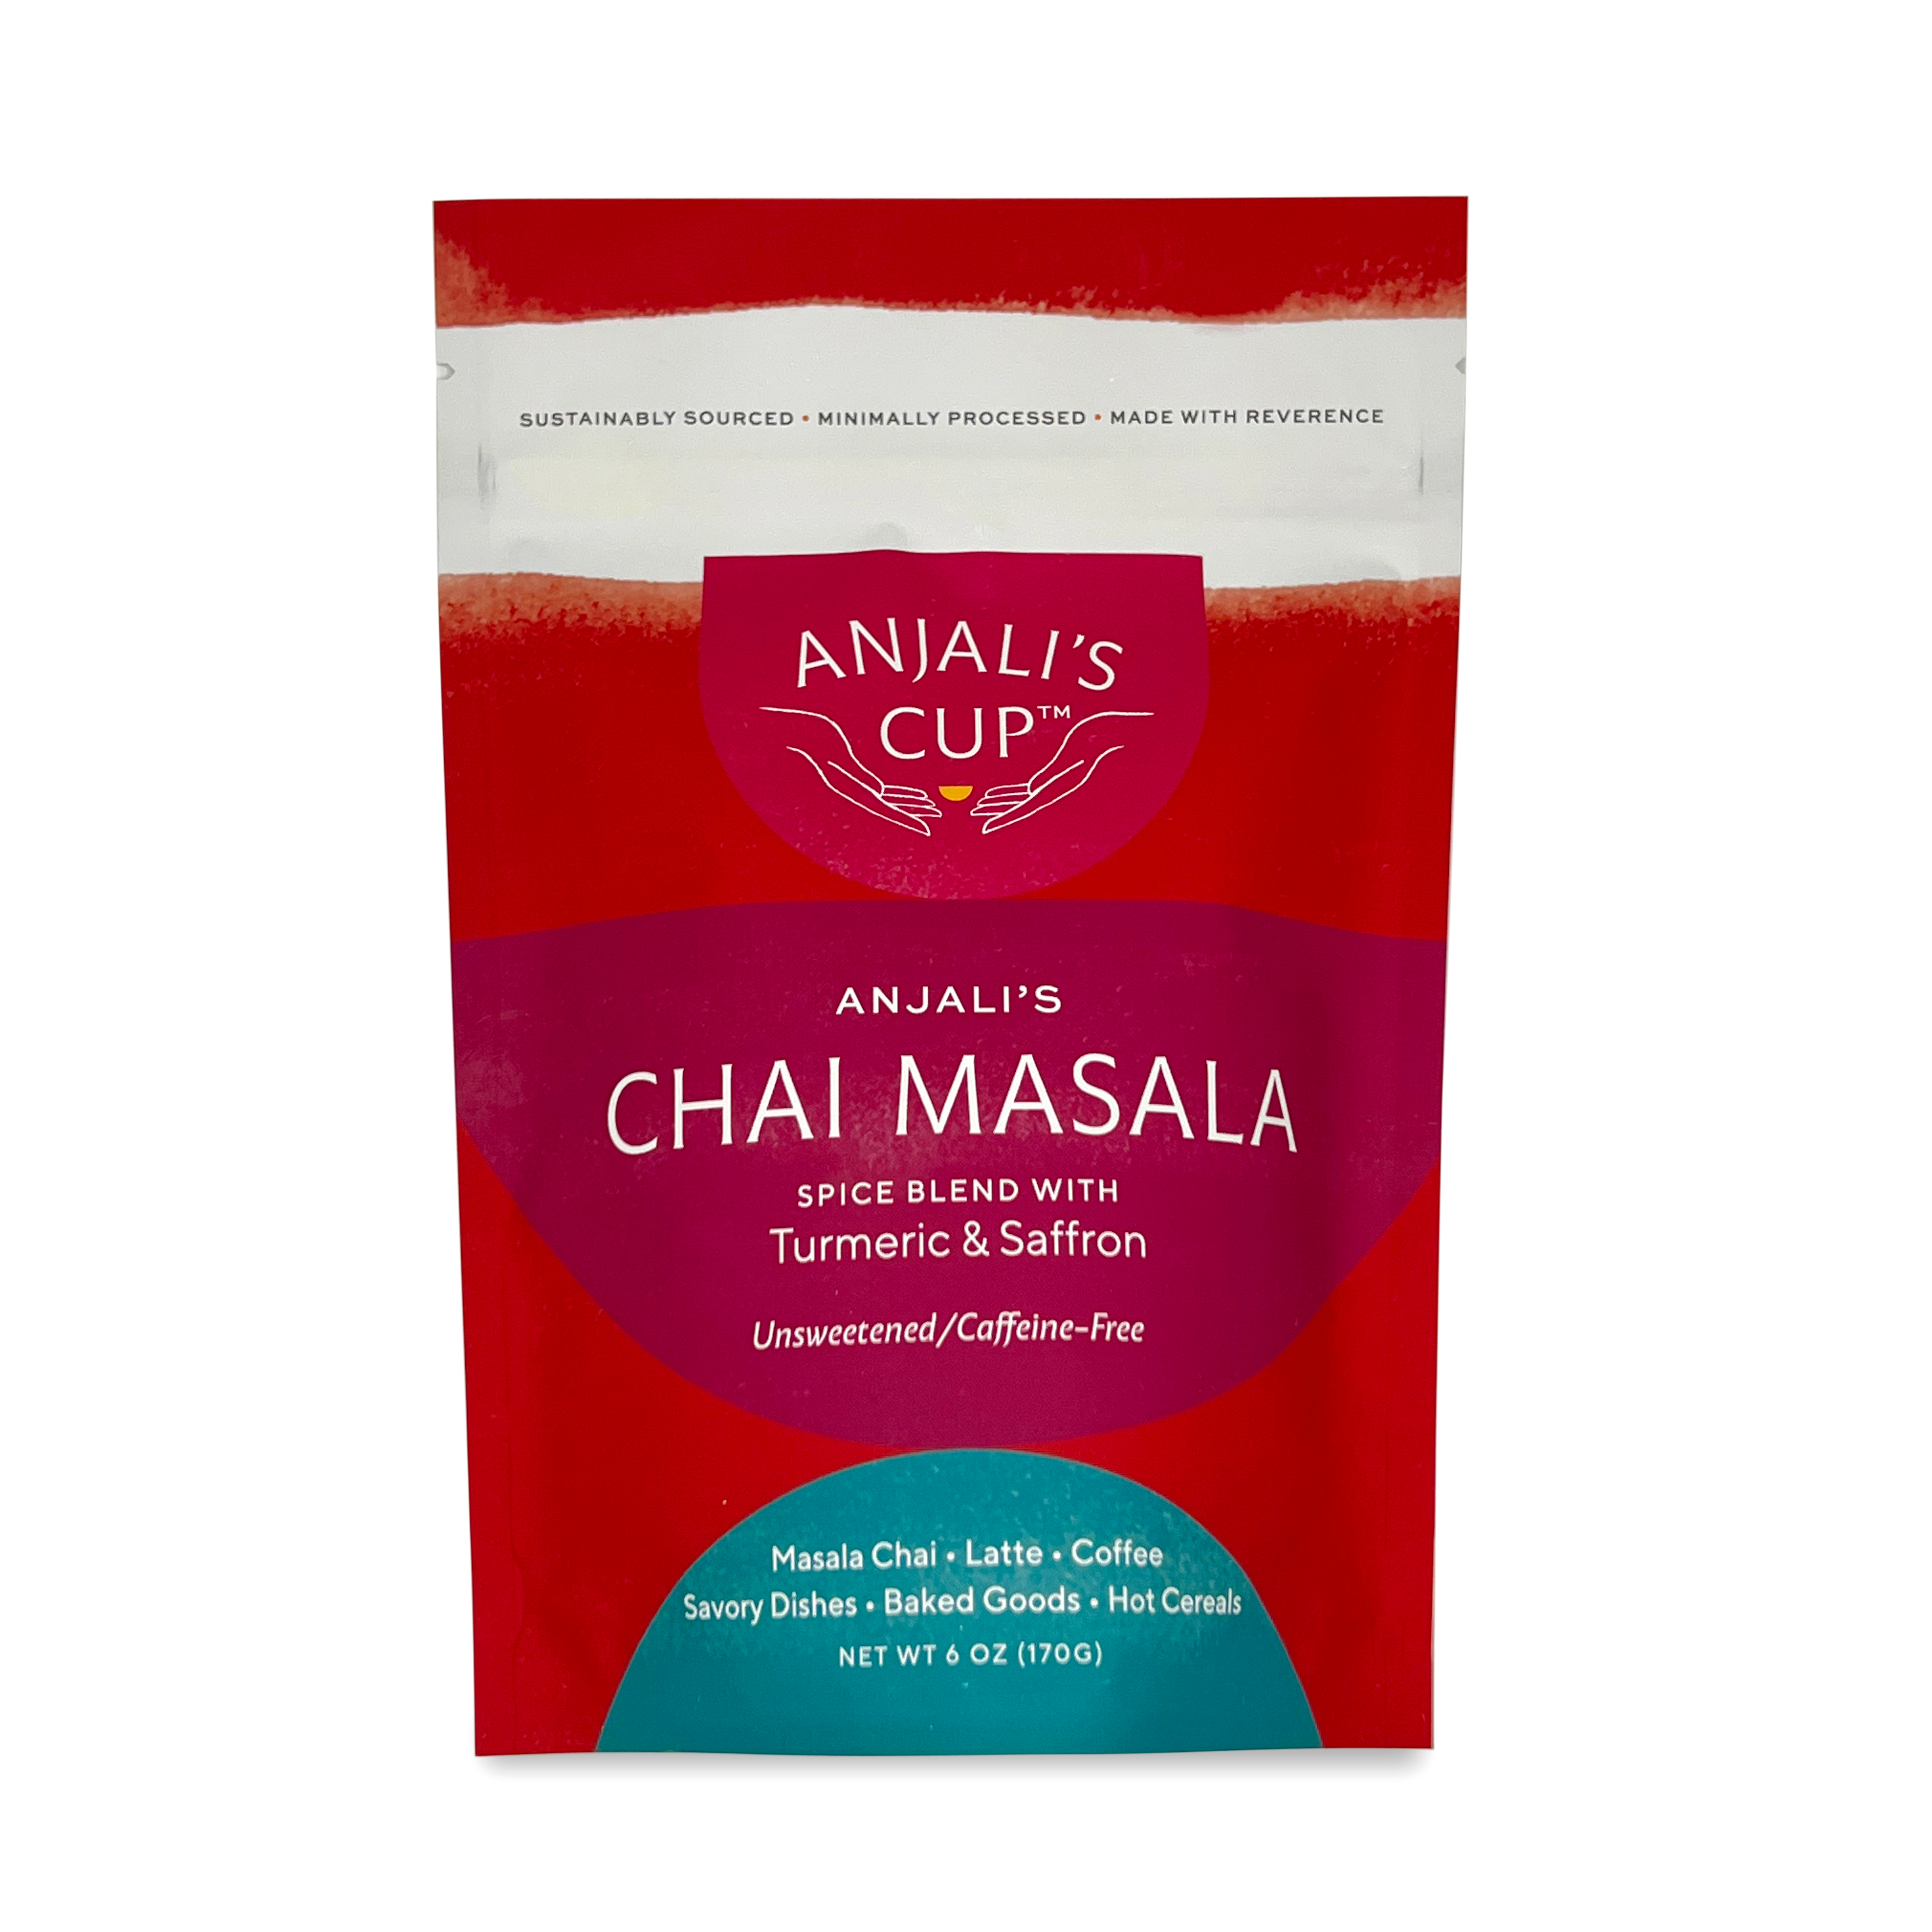 Anjali’s Chai Masala with Turmeric and Saffron